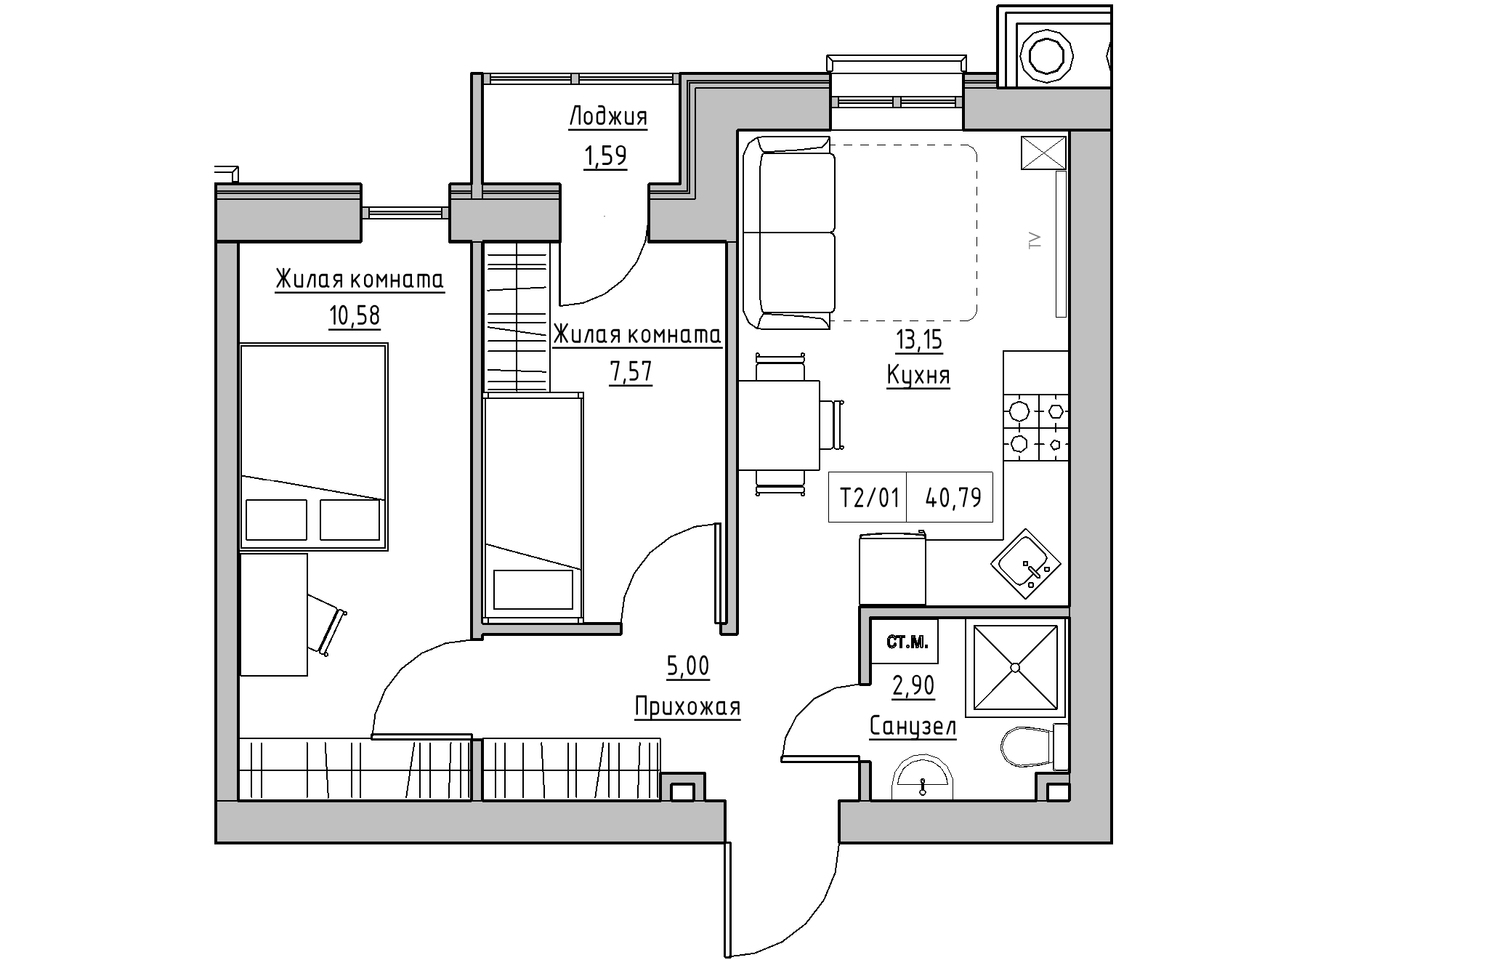 Planning 2-rm flats area 40.79m2, KS-010-01/0005.